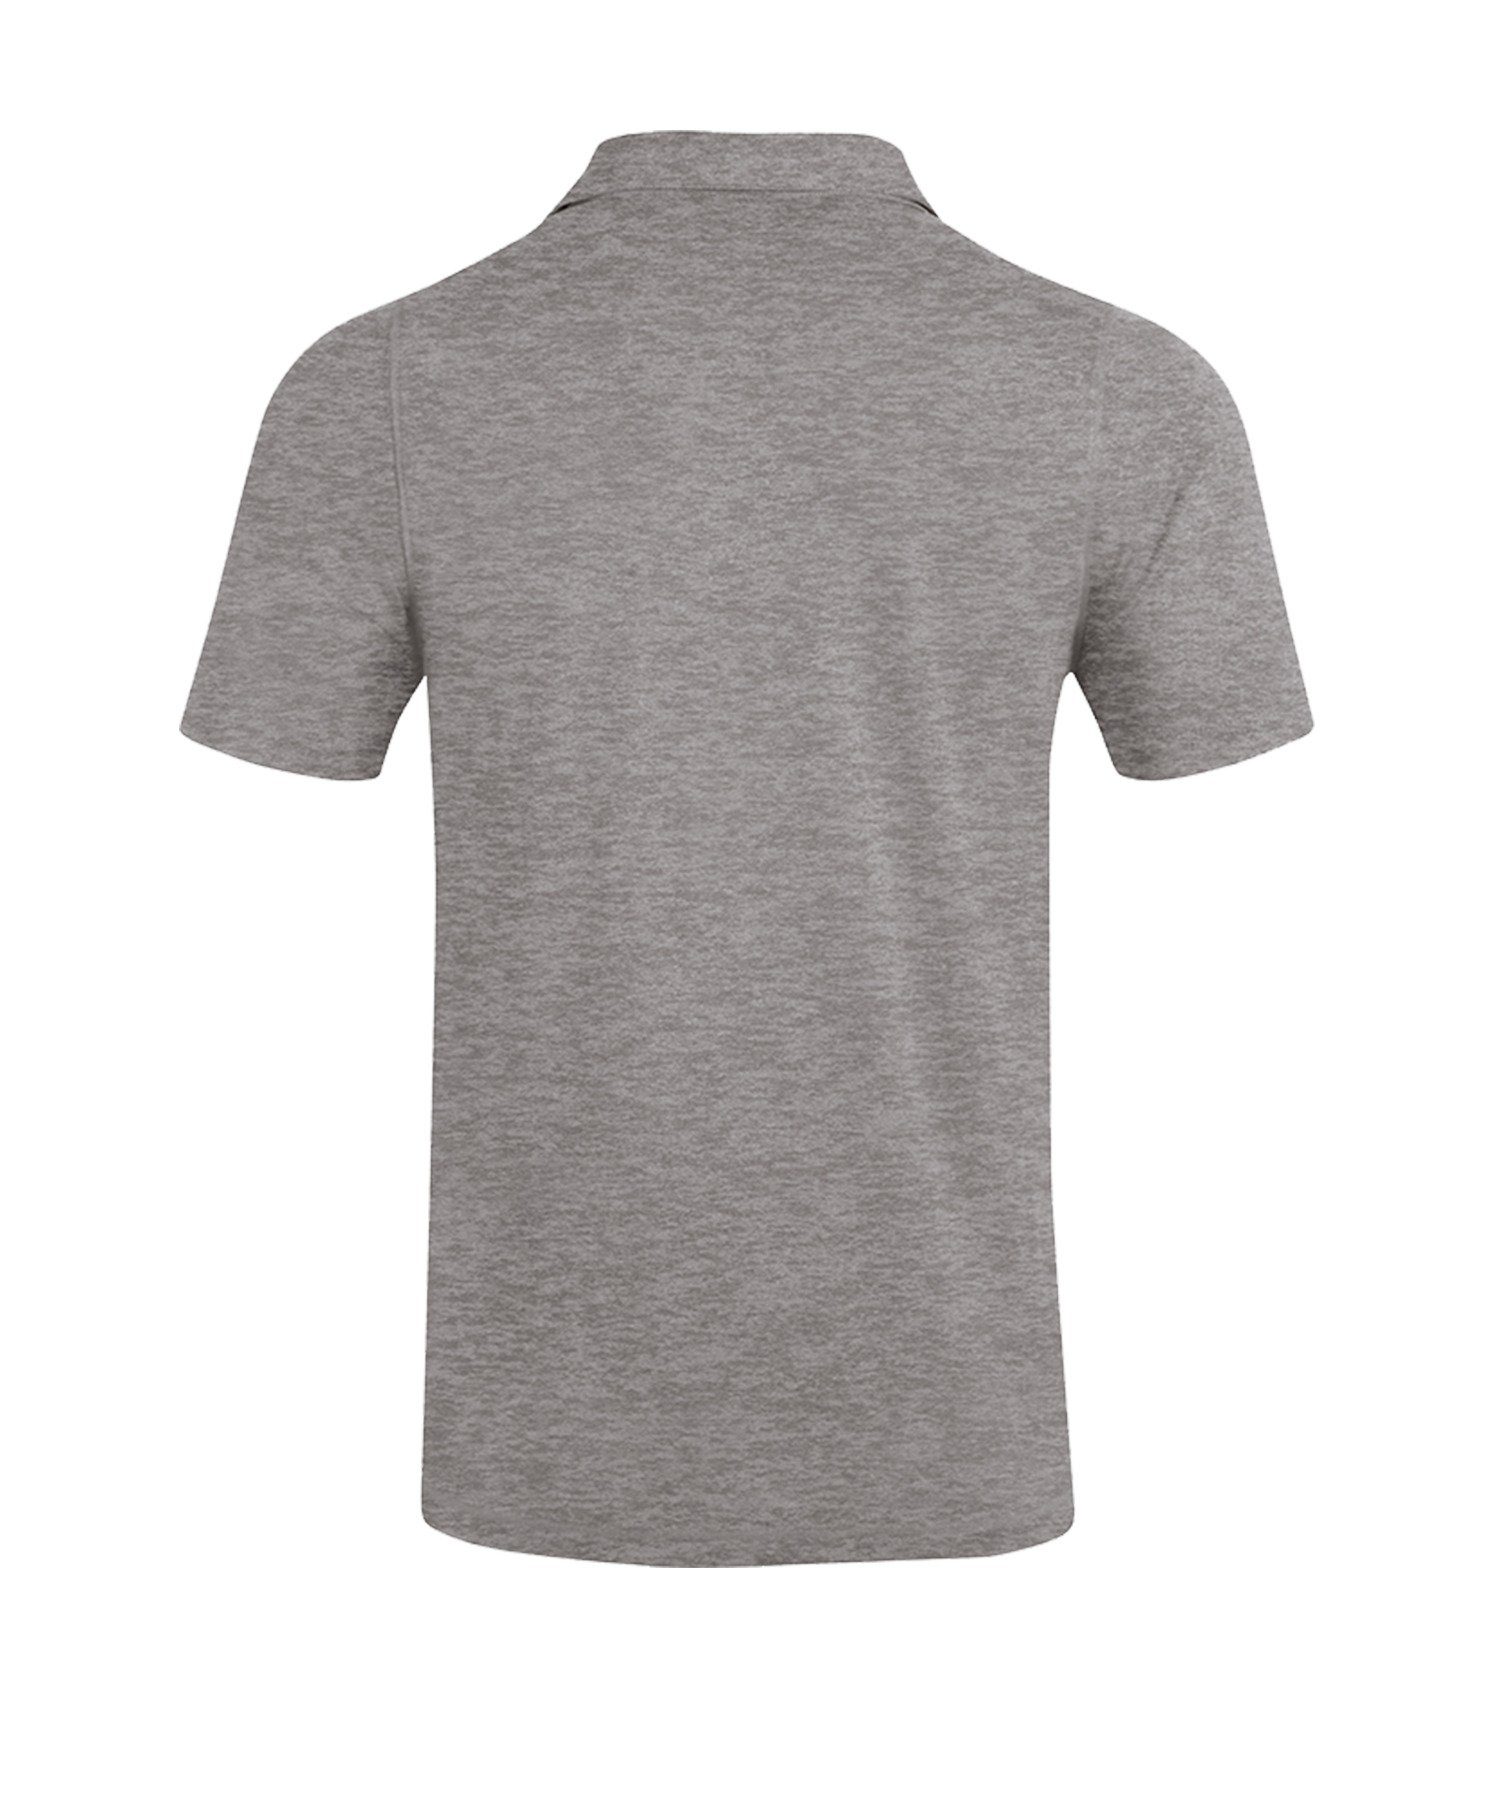 Jako default T-Shirt Premium Grauschwarz Poloshirt Basics